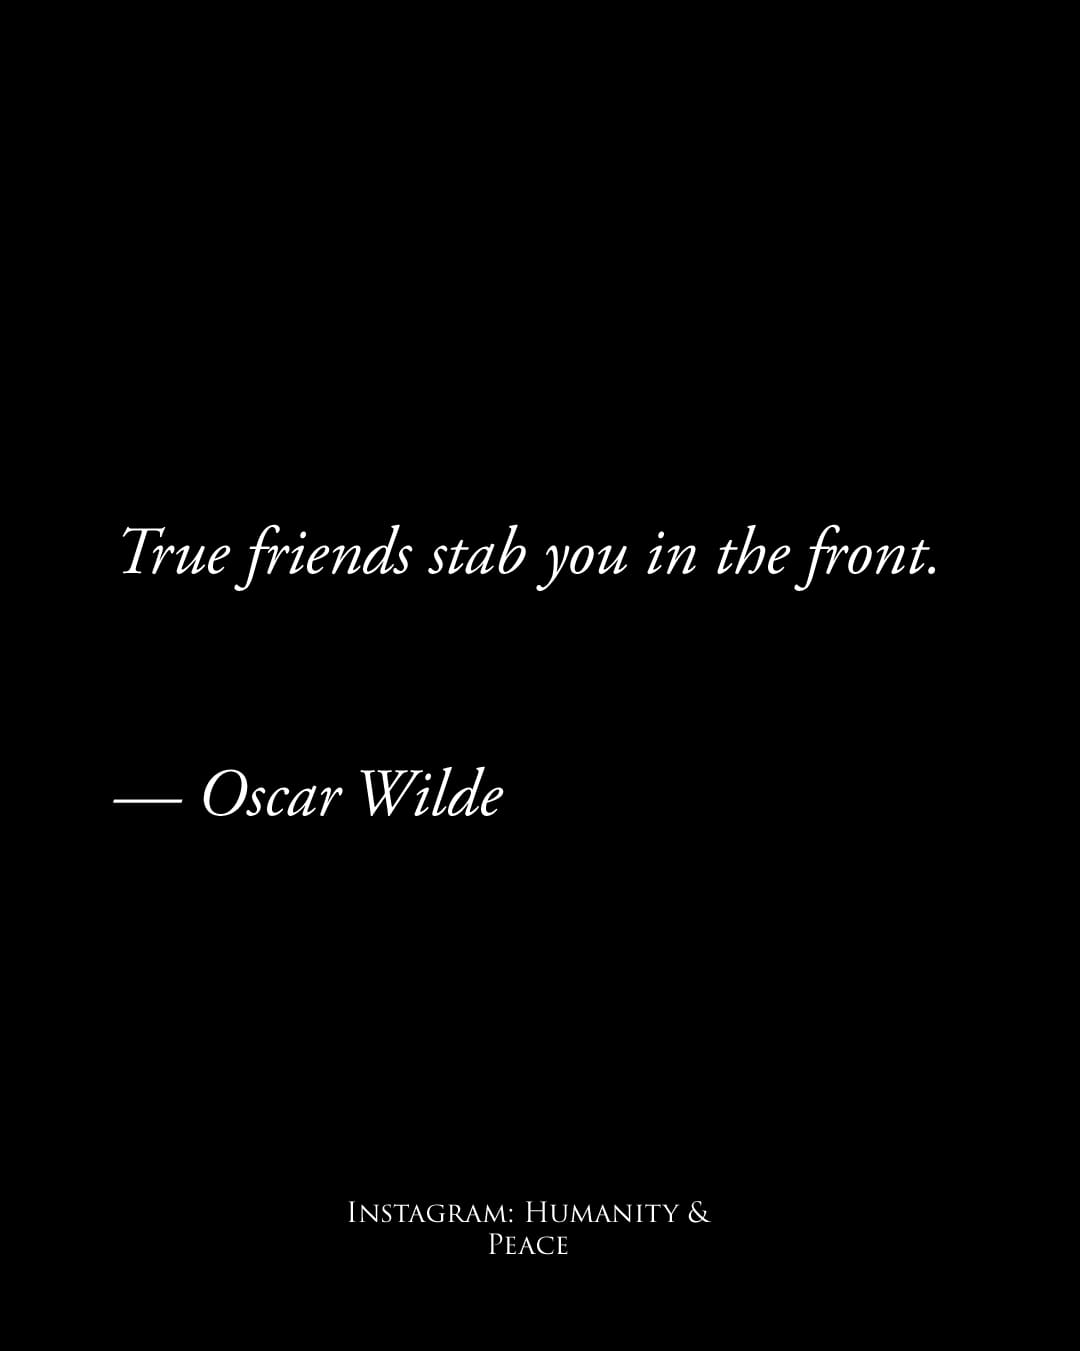 true friends stab you in the front, oscar wilde